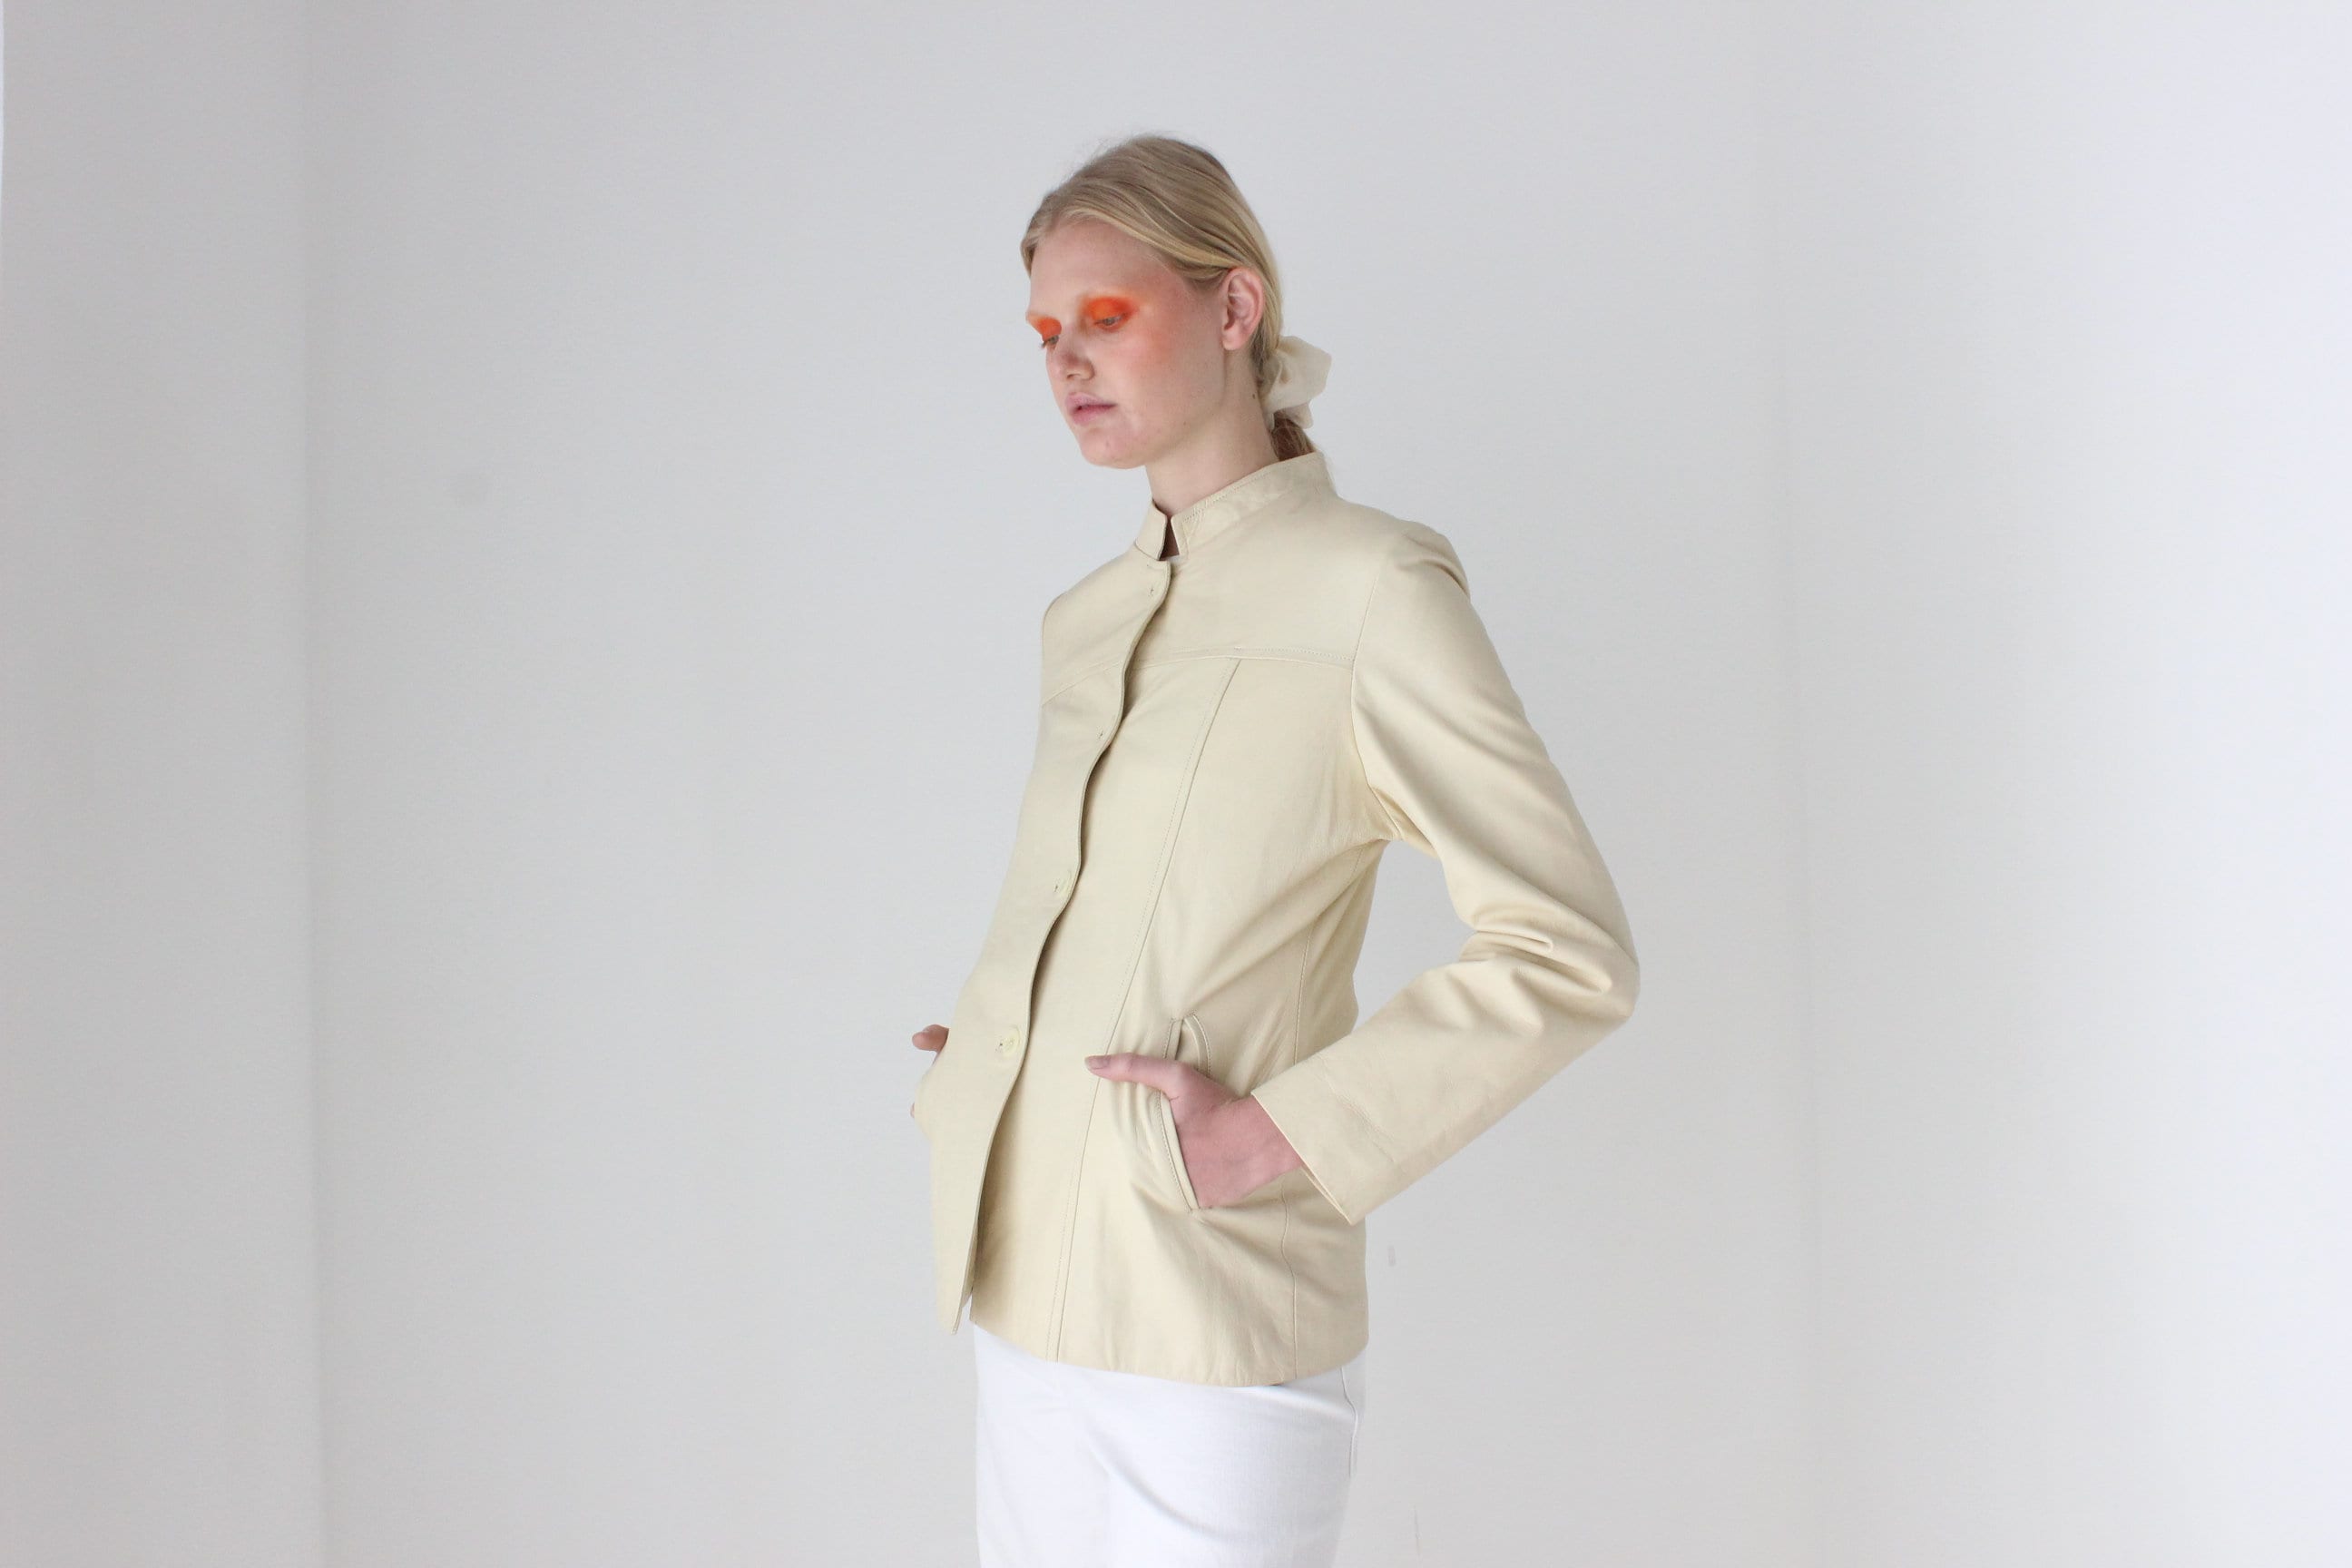 90s Cream Leather Mandarin Collar Jacket